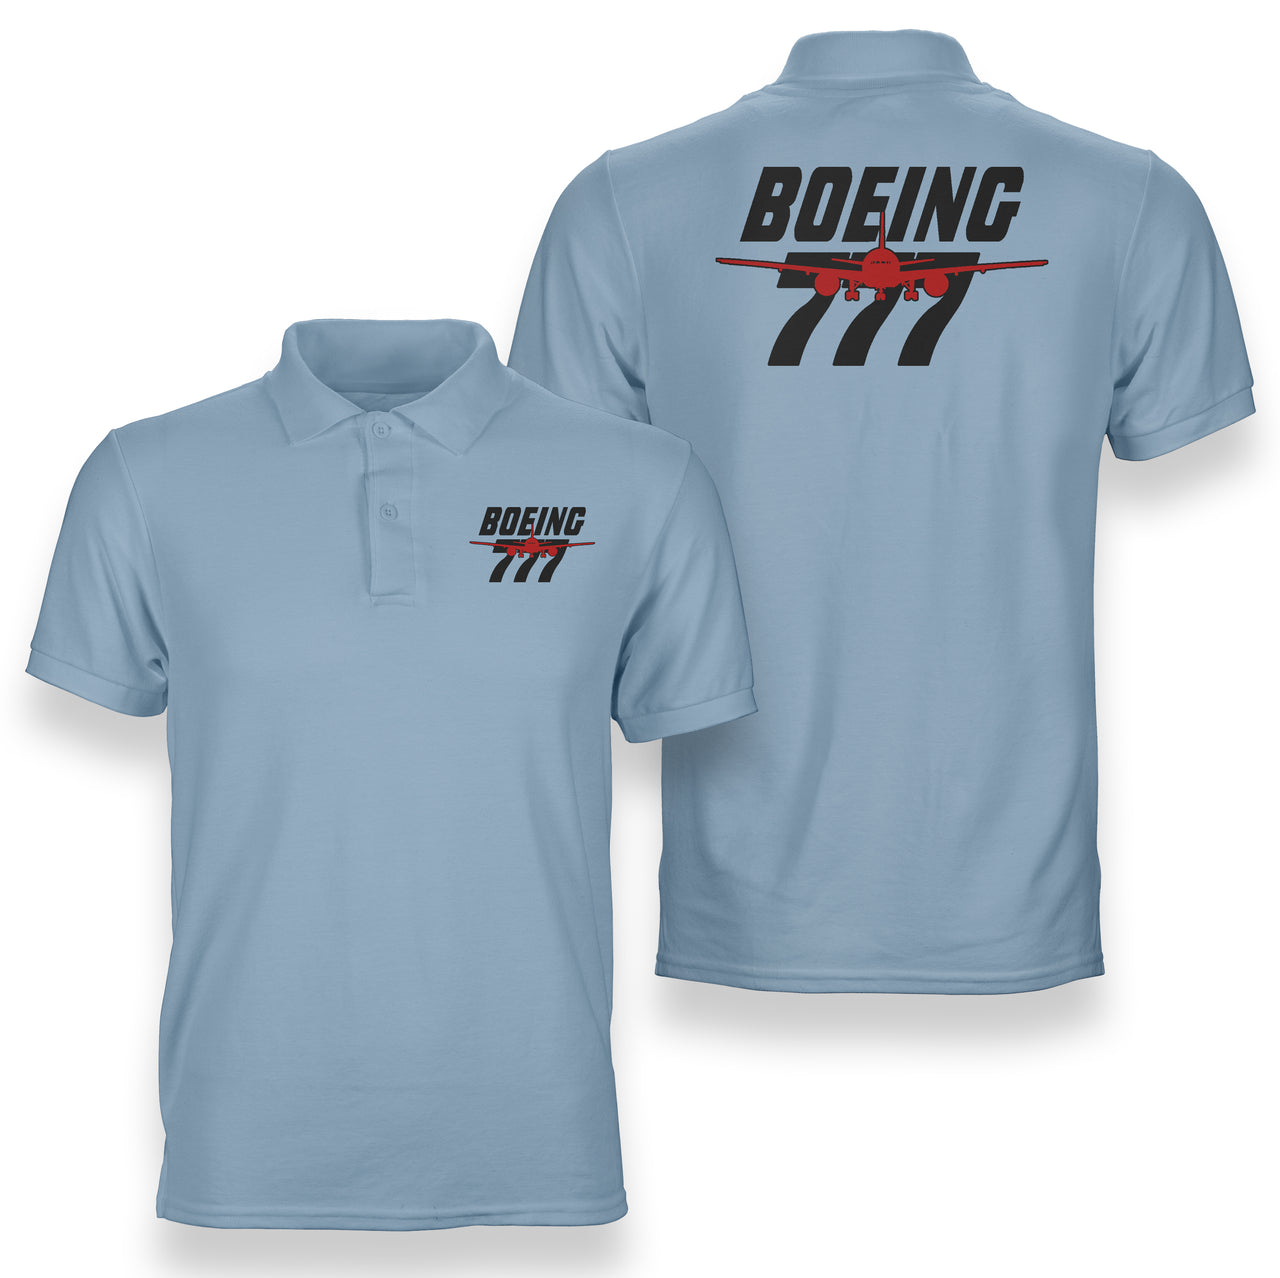 Amazing Boeing 777 Designed Double Side Polo T-Shirts